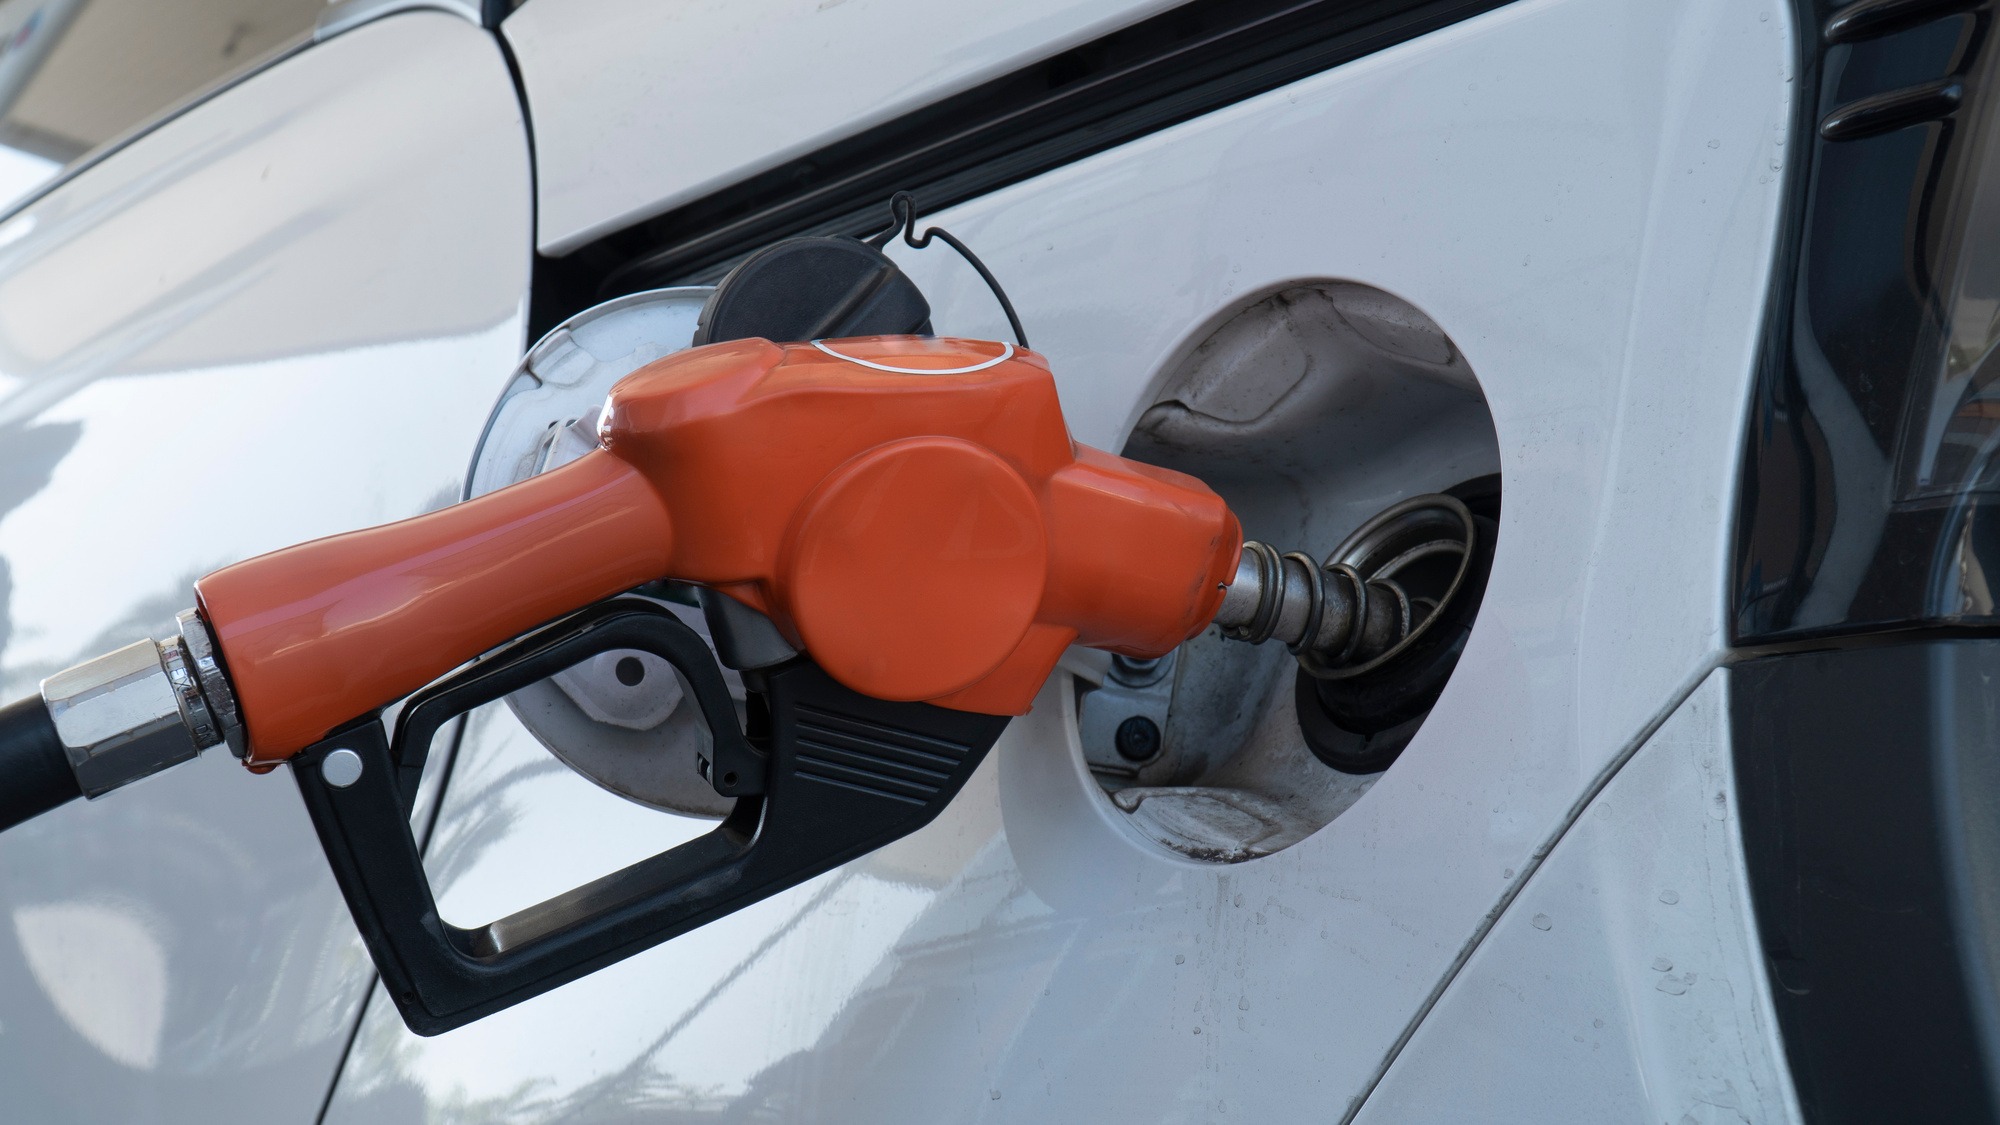 dispenser nozzle fuel fill oil into car tank.